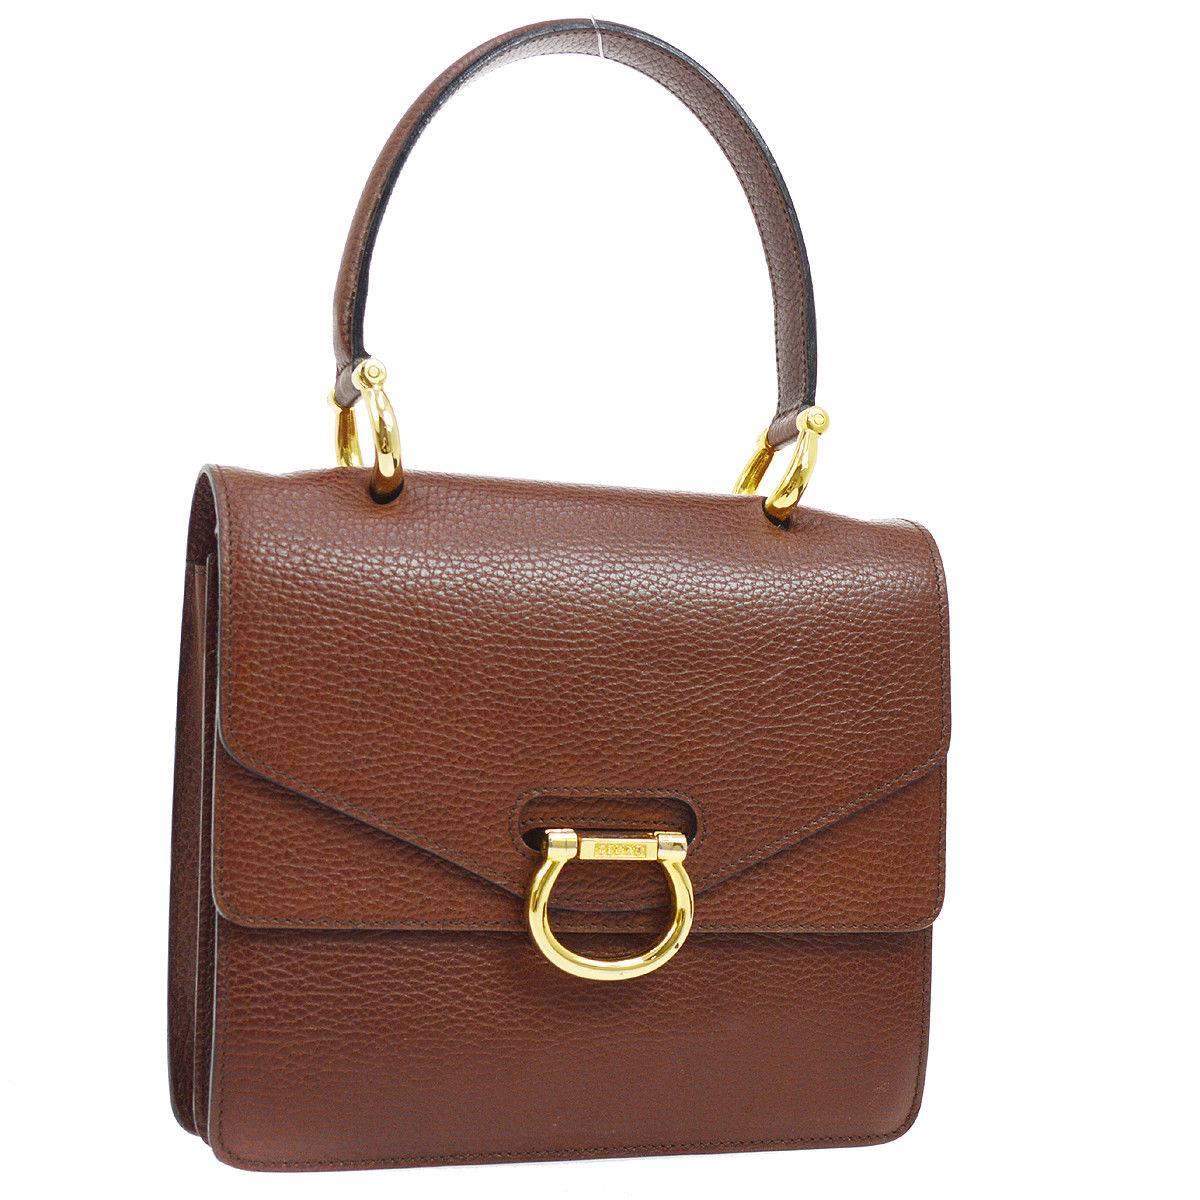 Celine Cognac Leather Gold Kelly Style Evening Top Handle Satchel Flap Bag